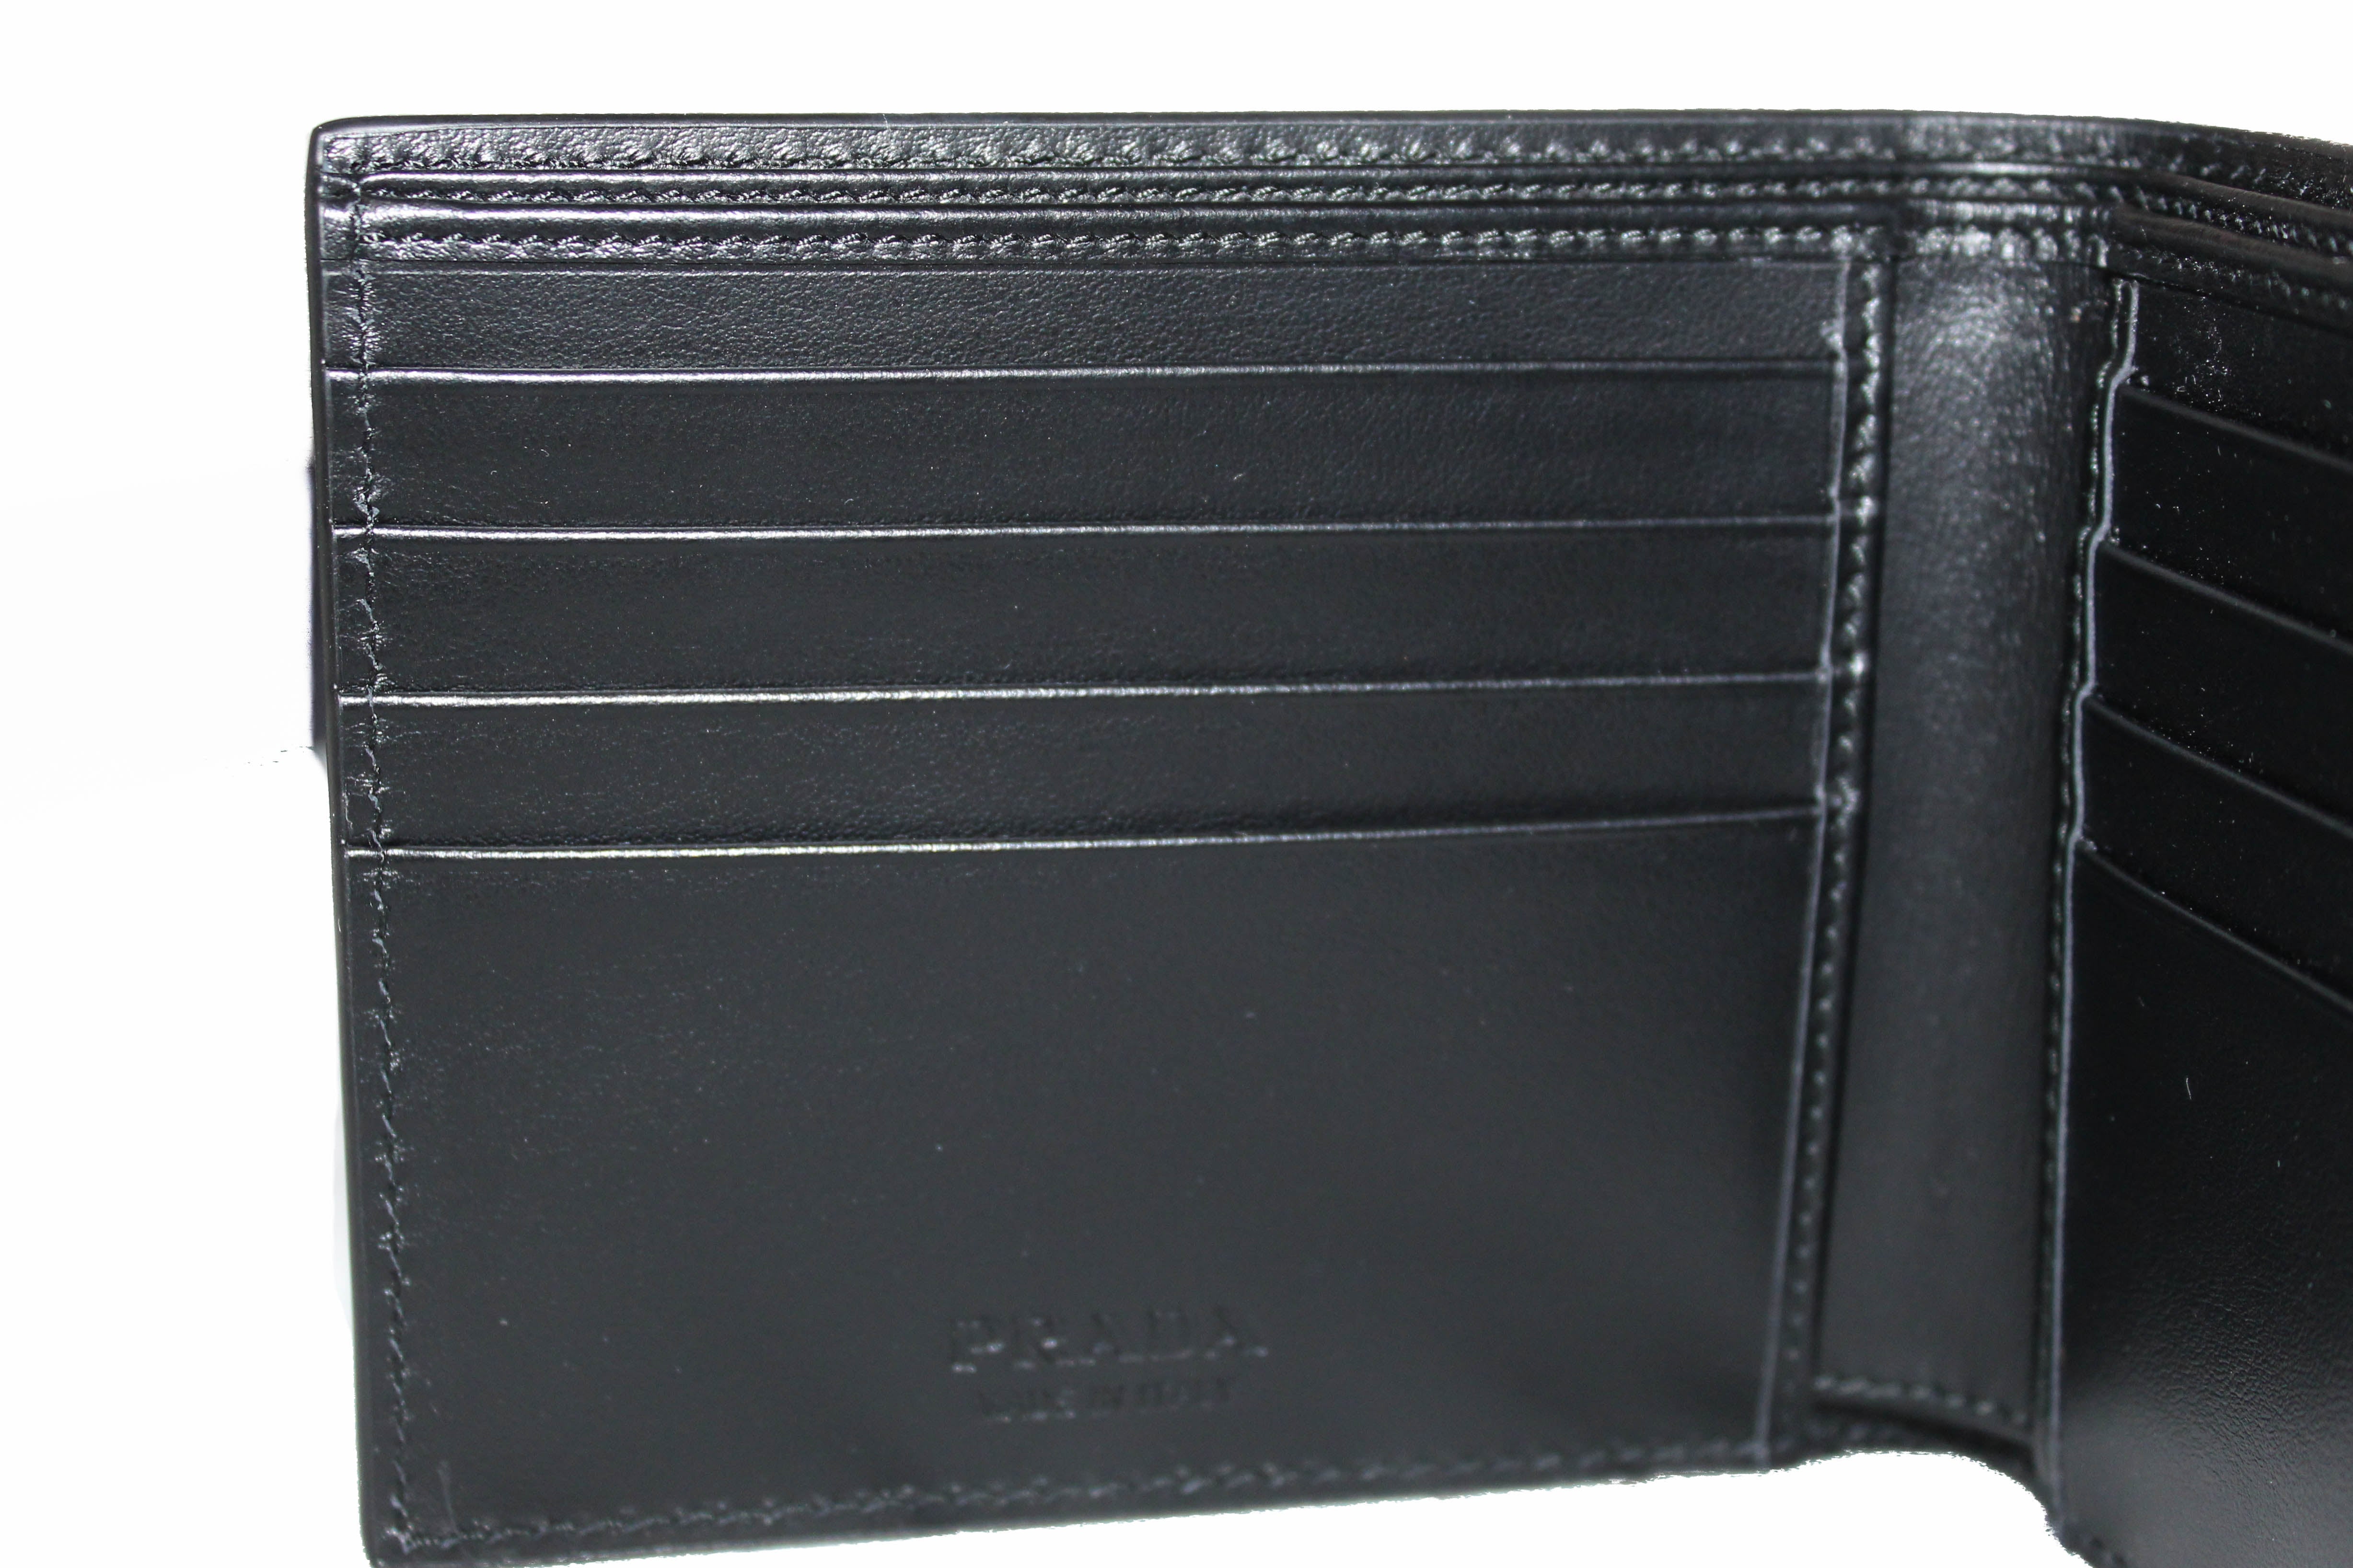 Authentic NEW Prada Black Saffiano Leather Men Wallet